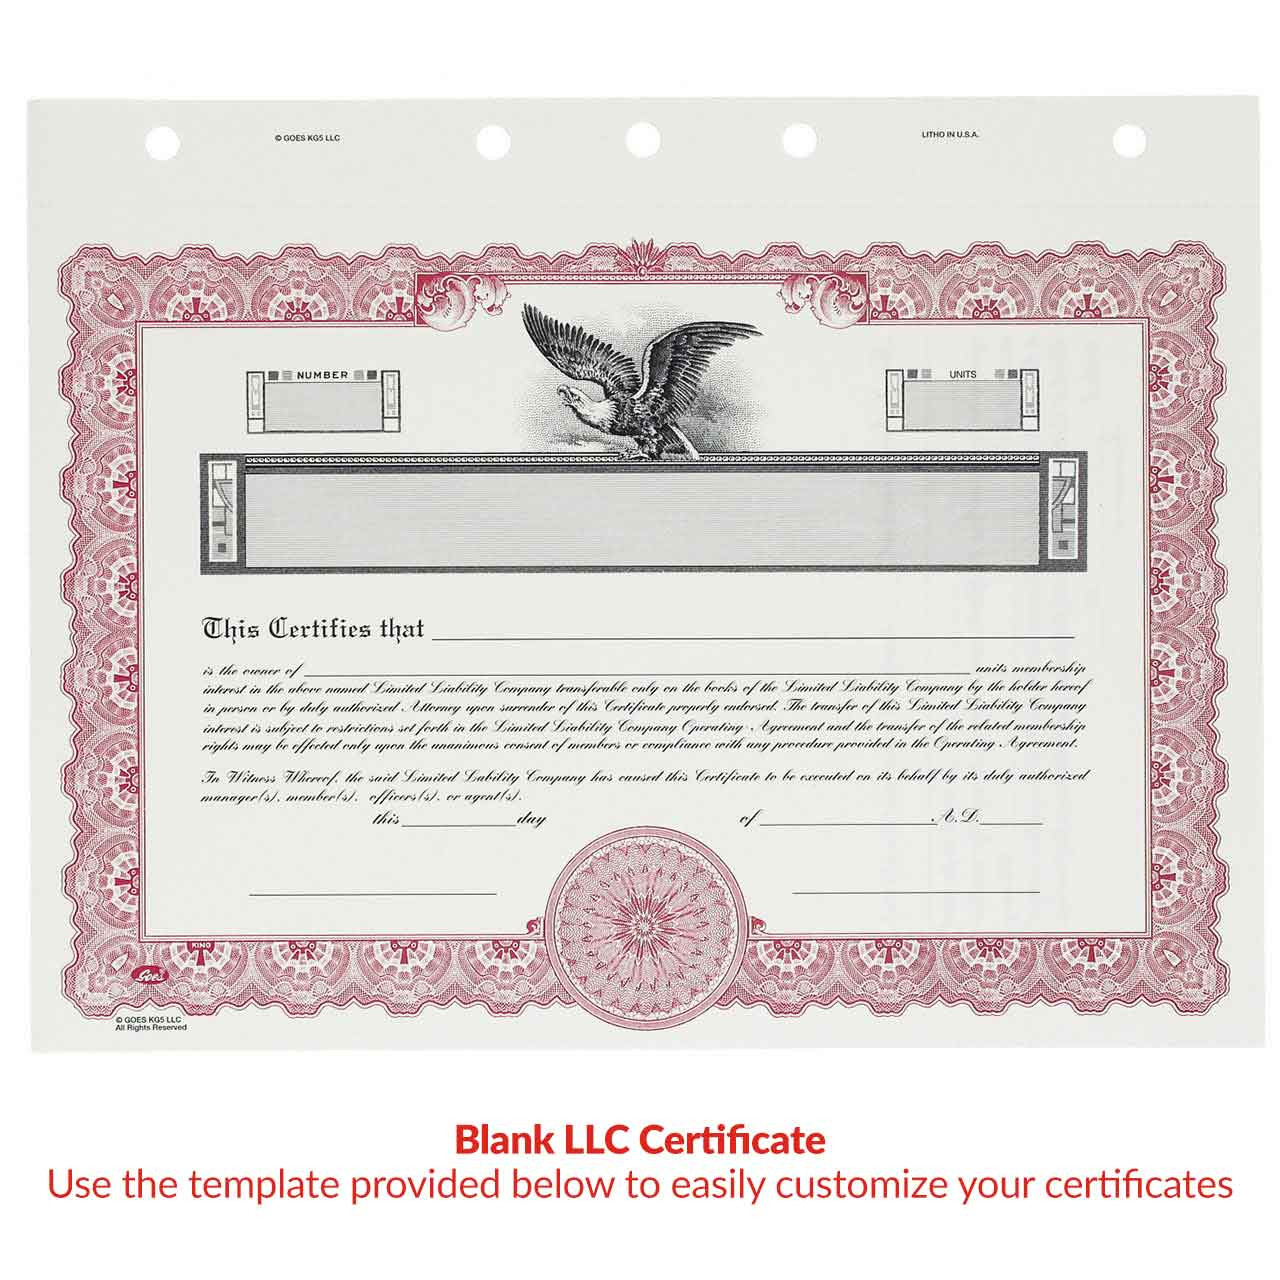 Customizable LLC Certificates